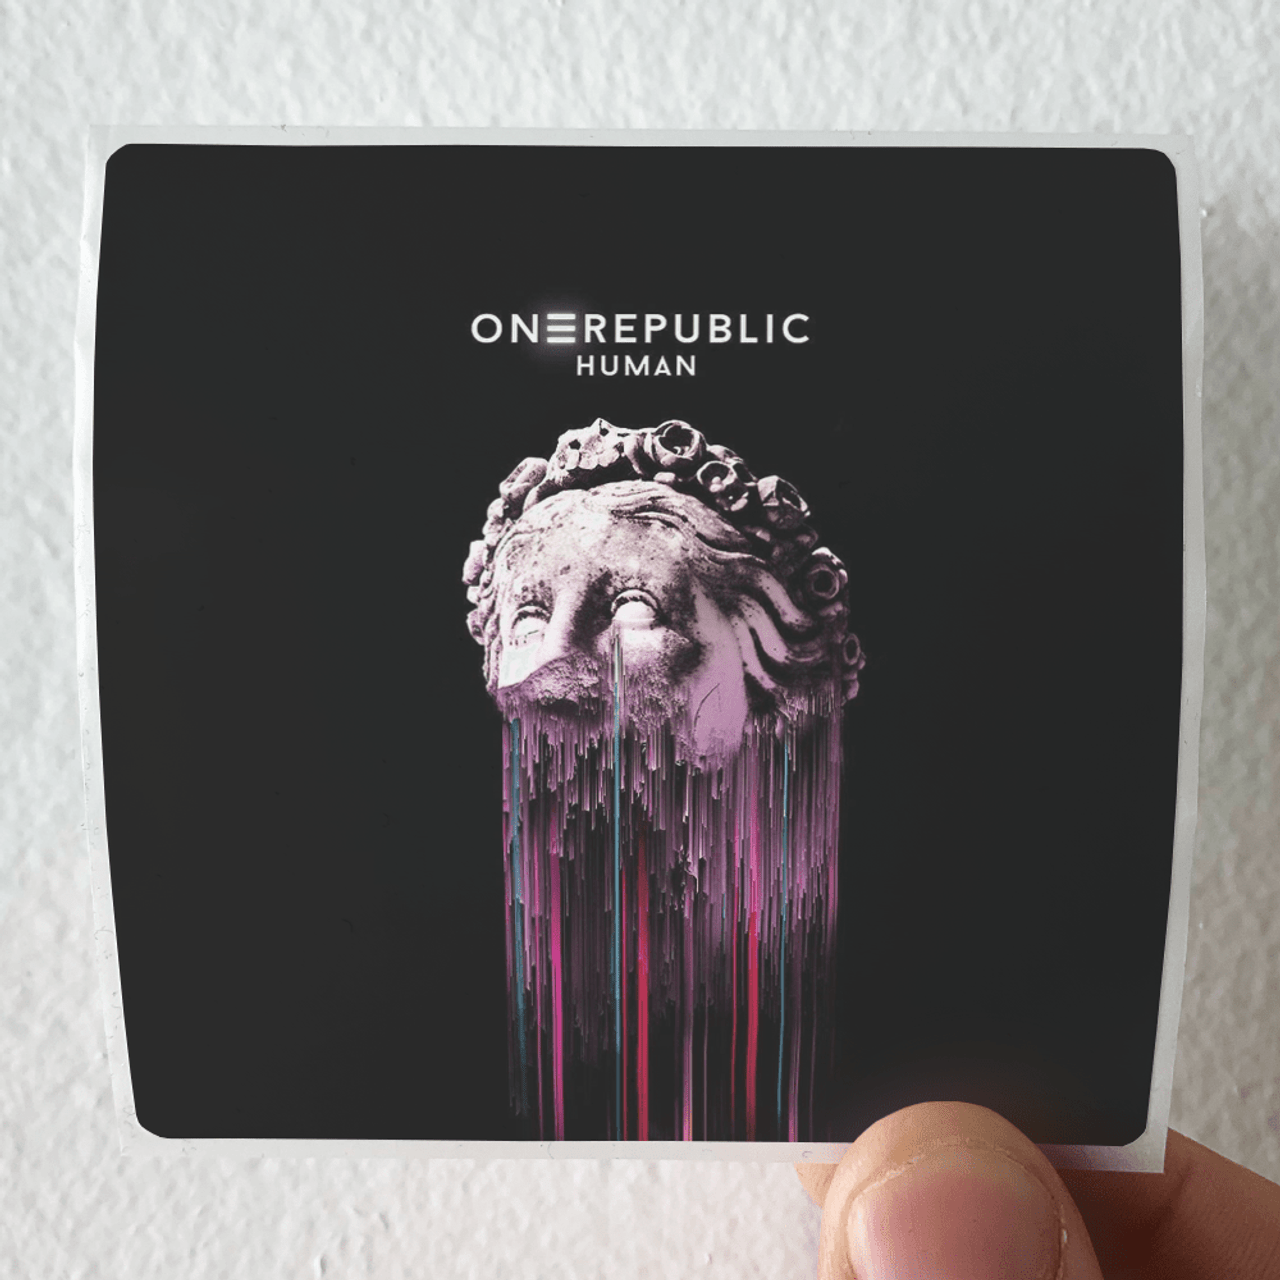 Onerepublic Human Album Cover Sticker